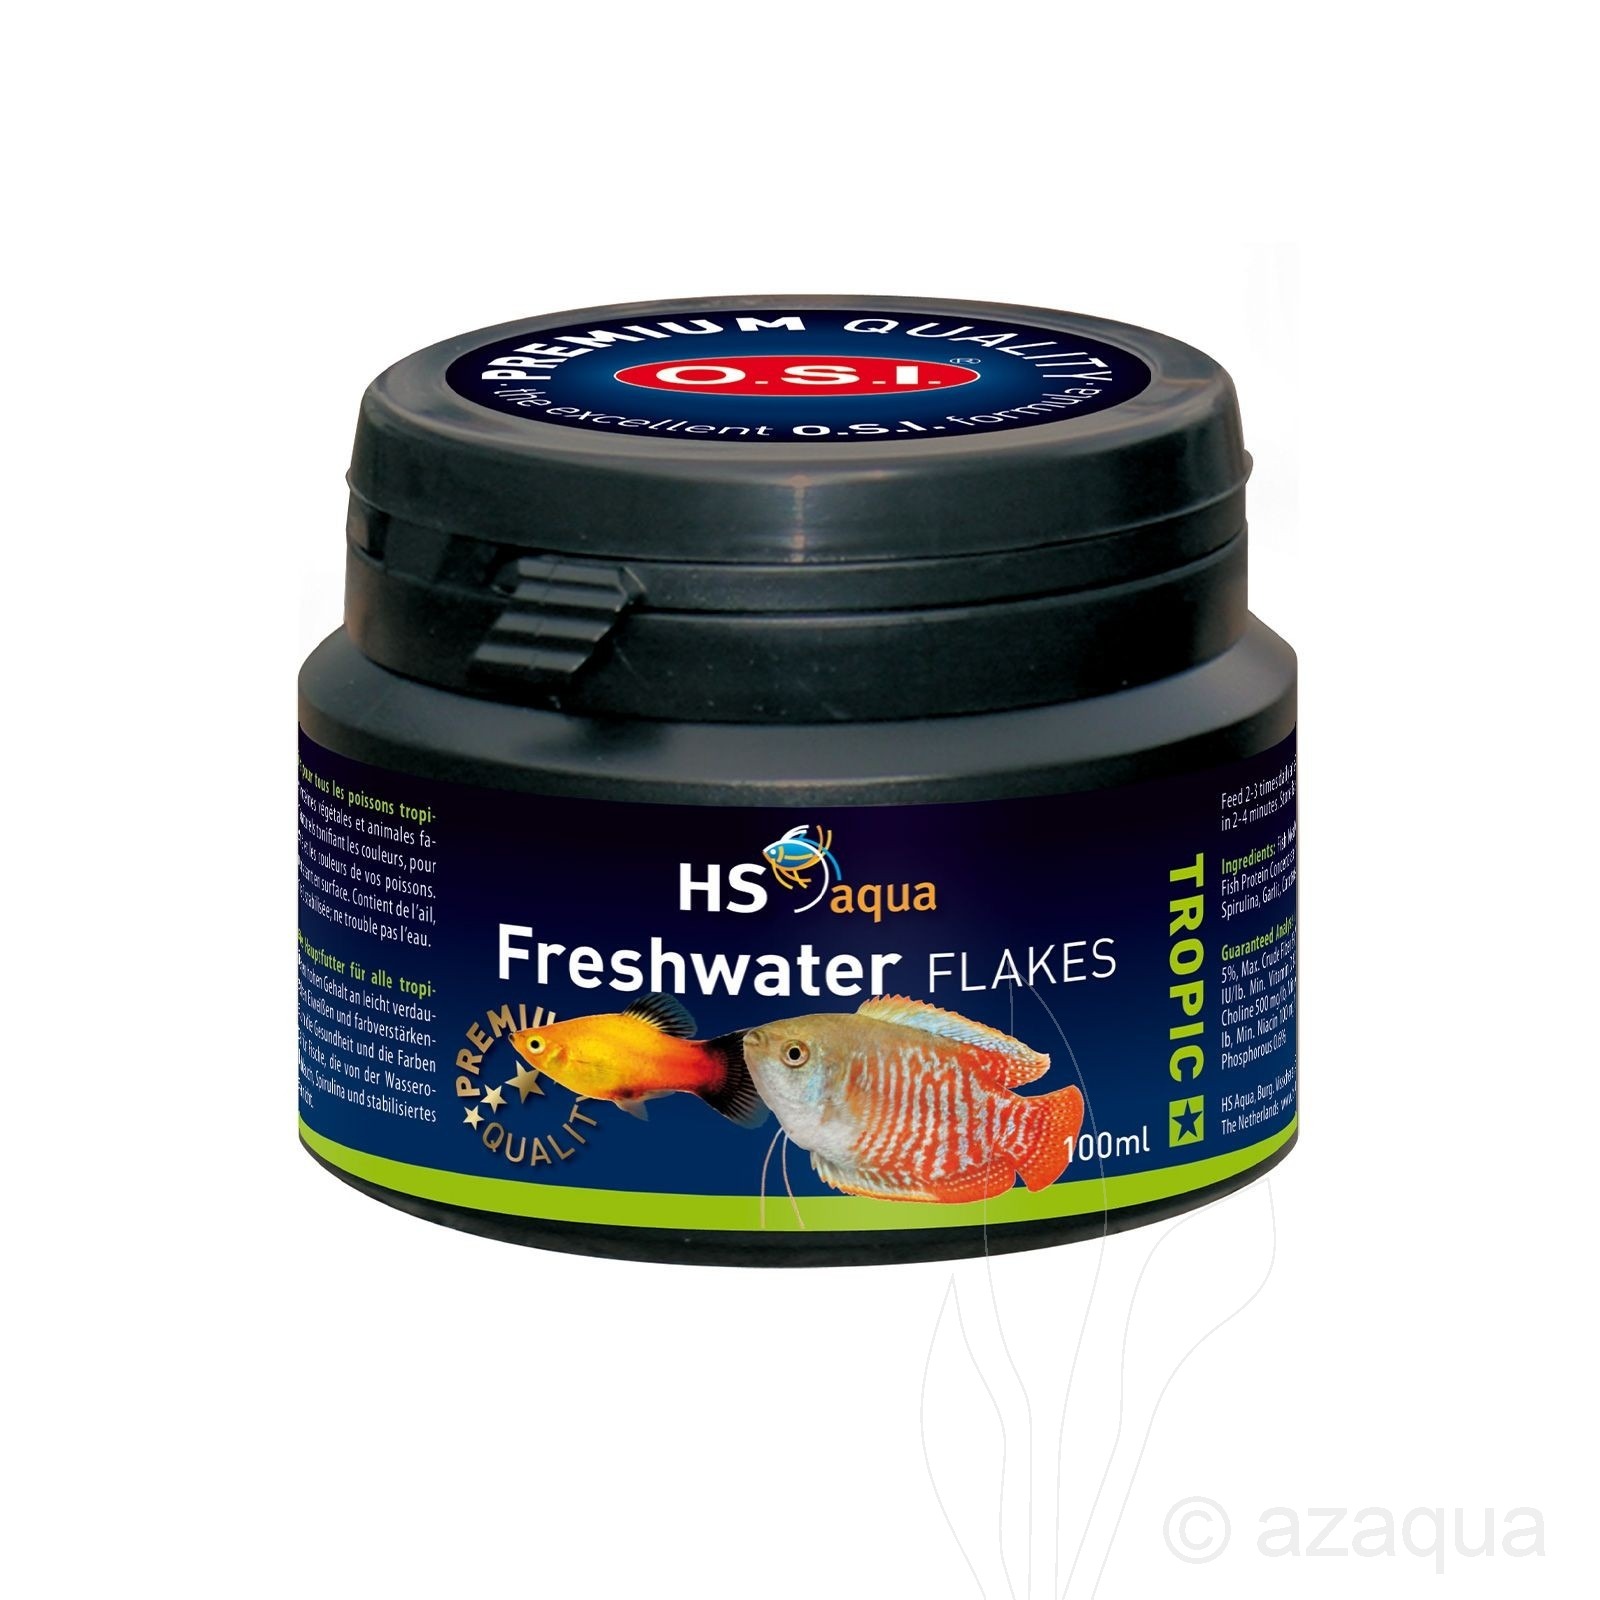 HS aqua Freshwater Flakes 100ml